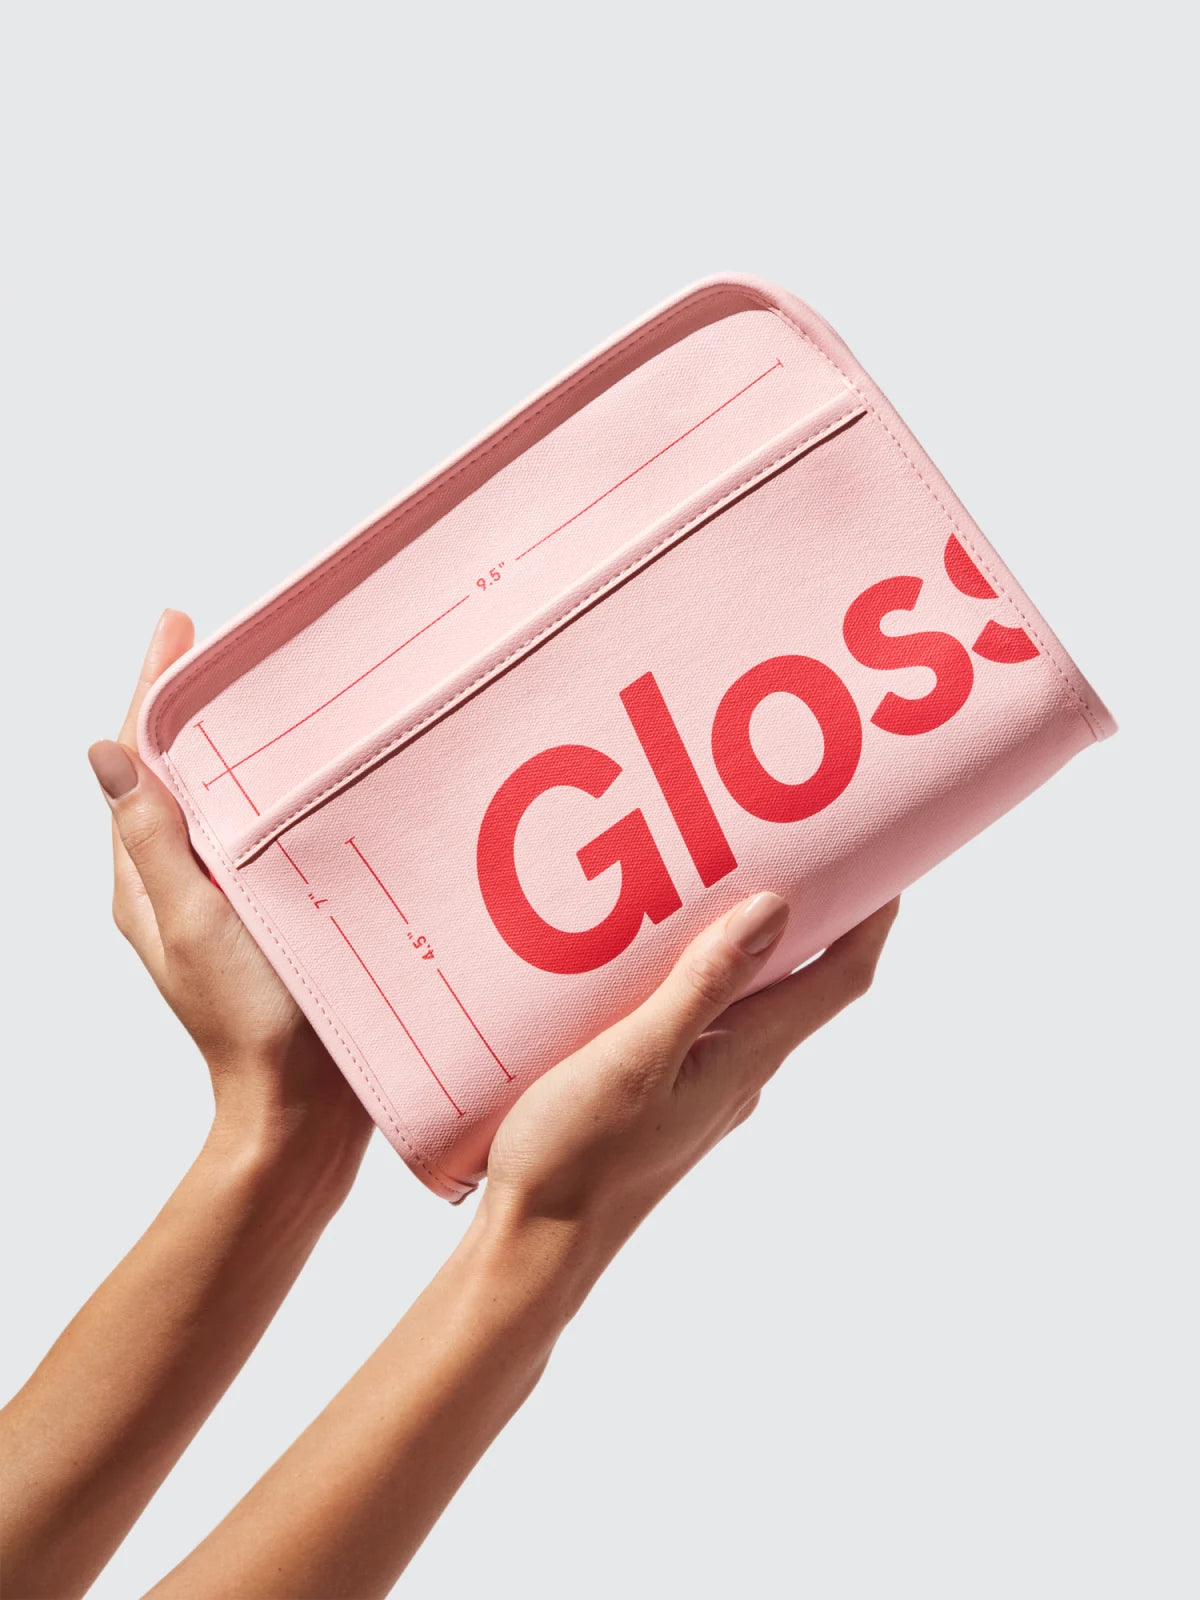 The beauty bag; Glossier